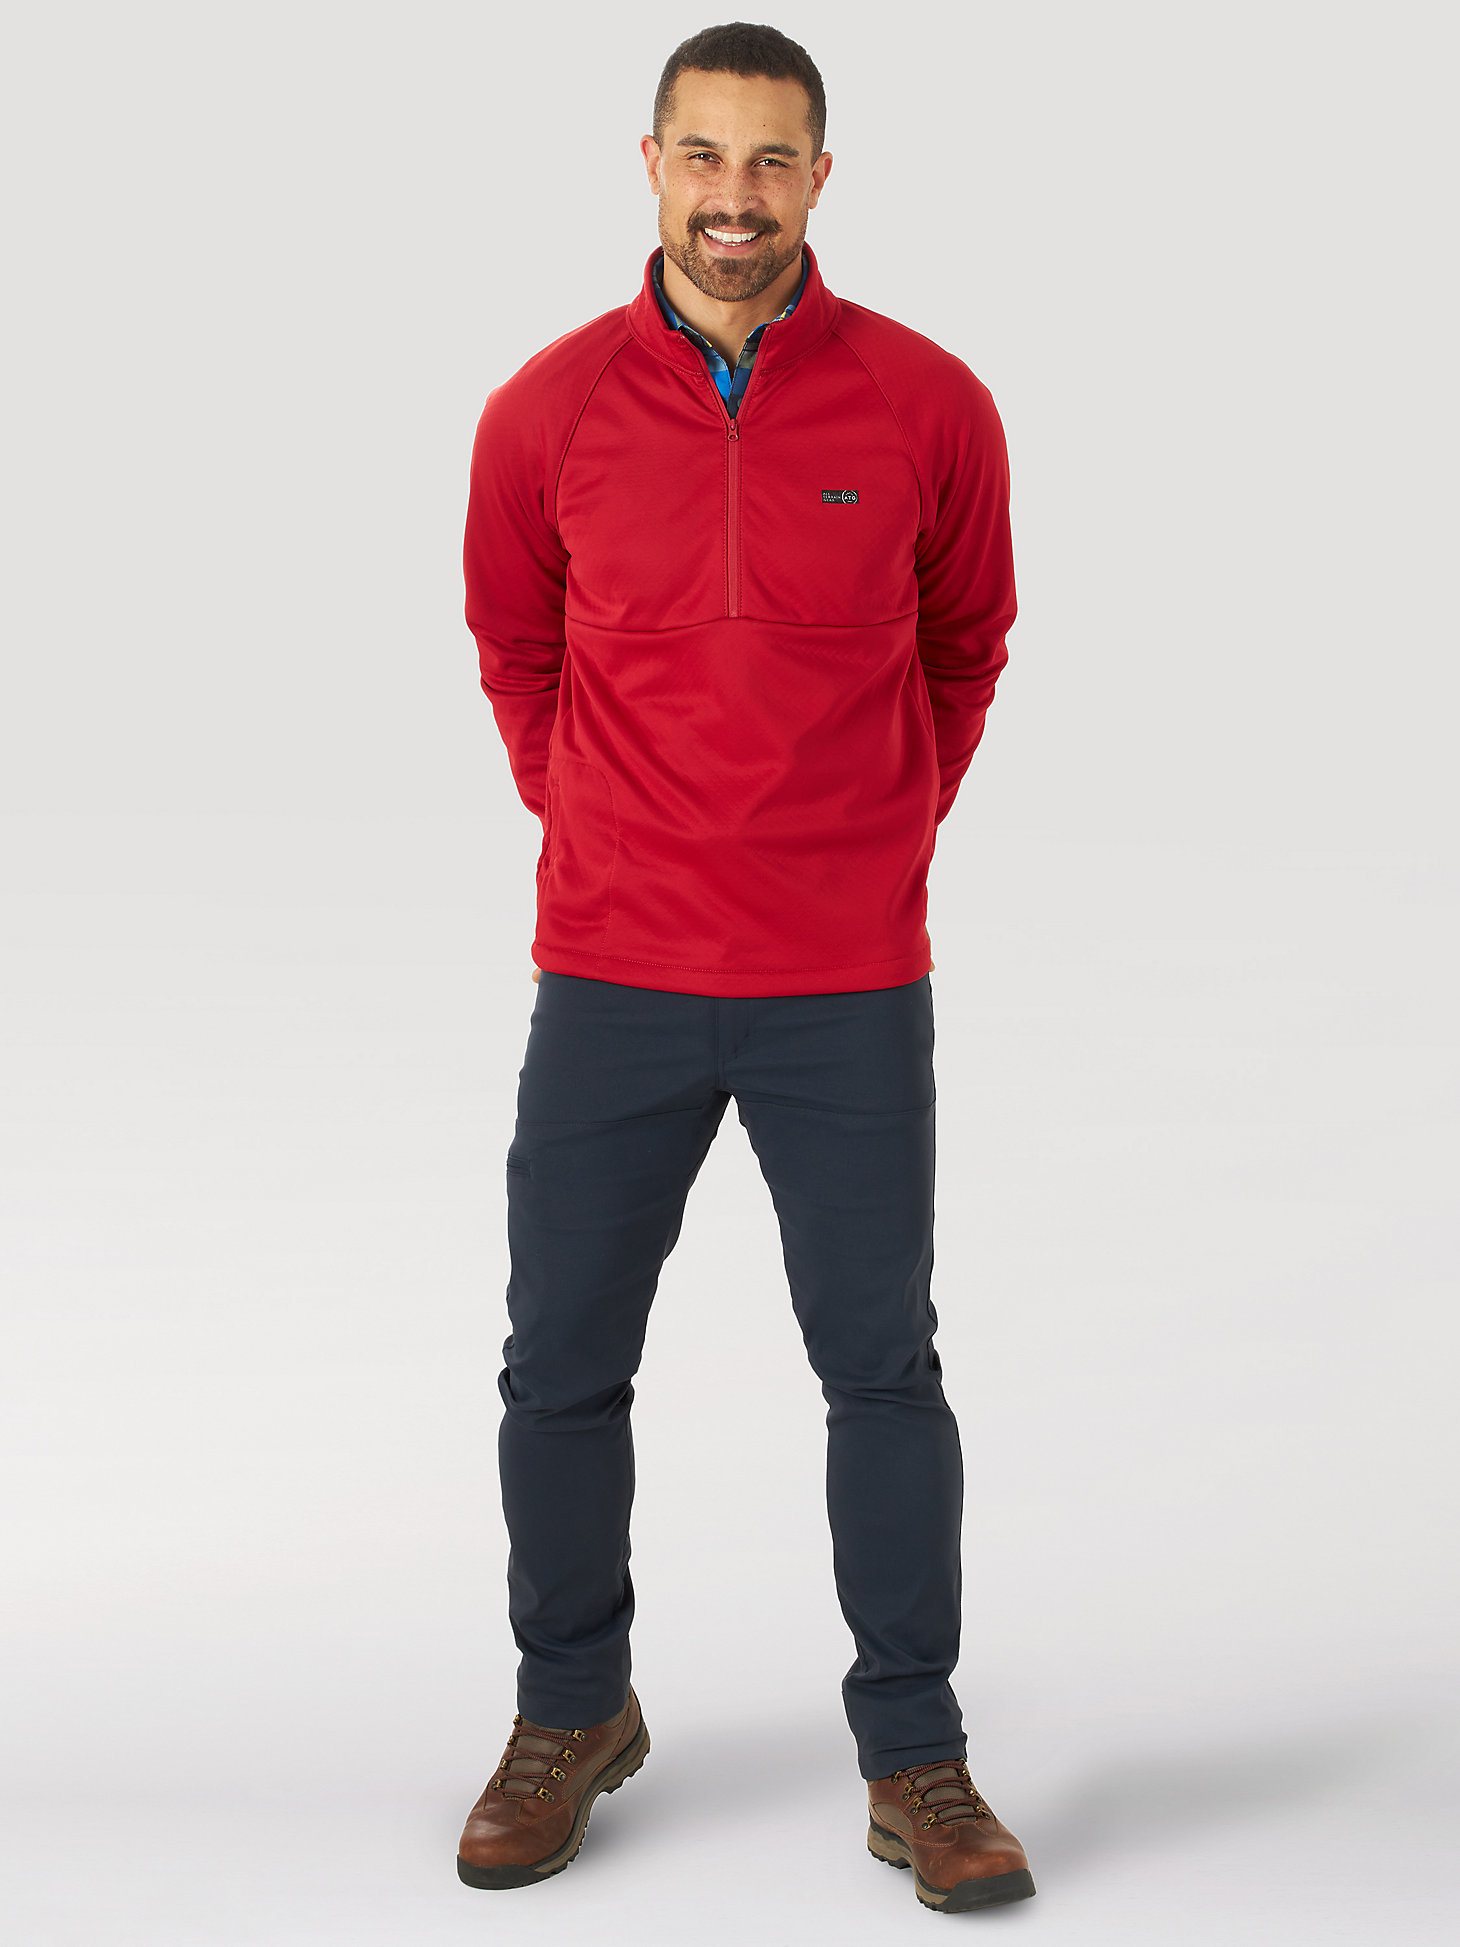 All Terrain Gear 1/2 Zip Sweatshirt in Haute Red alternative view 1